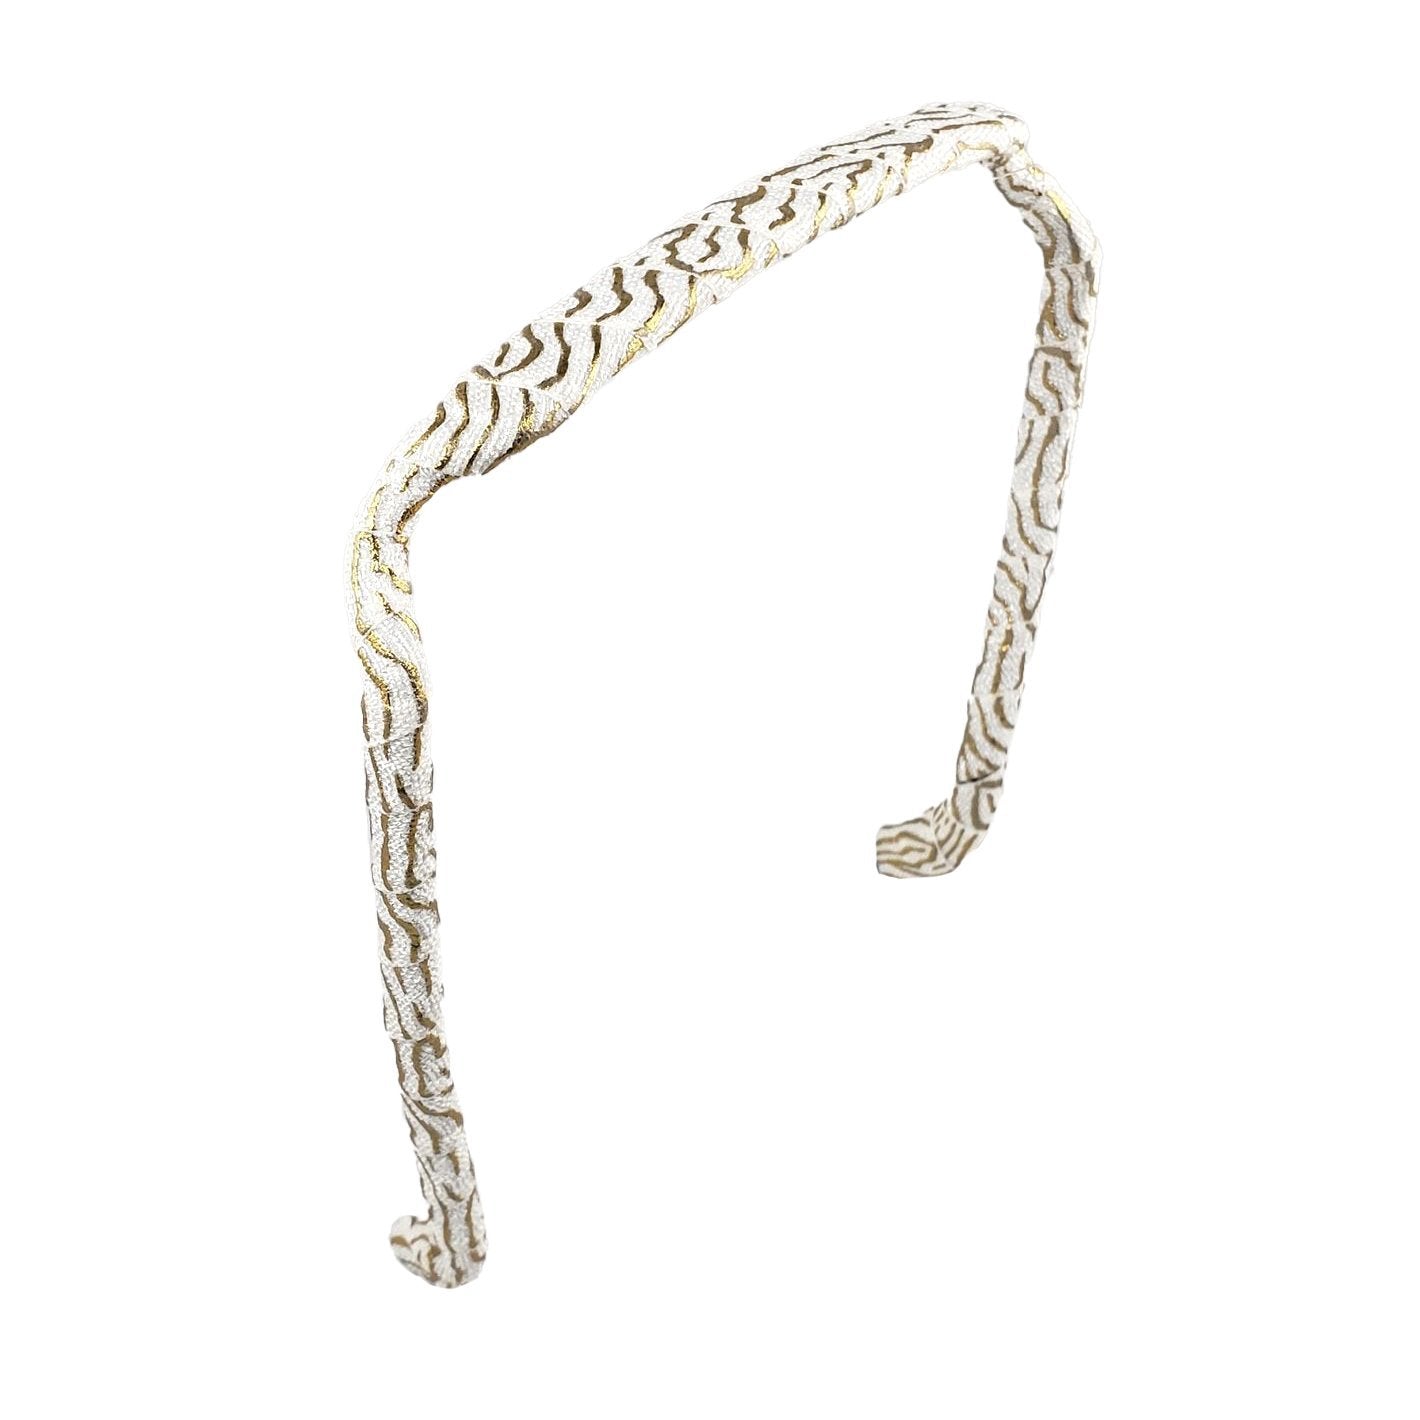 Zebra Gold and White Headband - Zazzy Bandz - hair accessory - curly hair